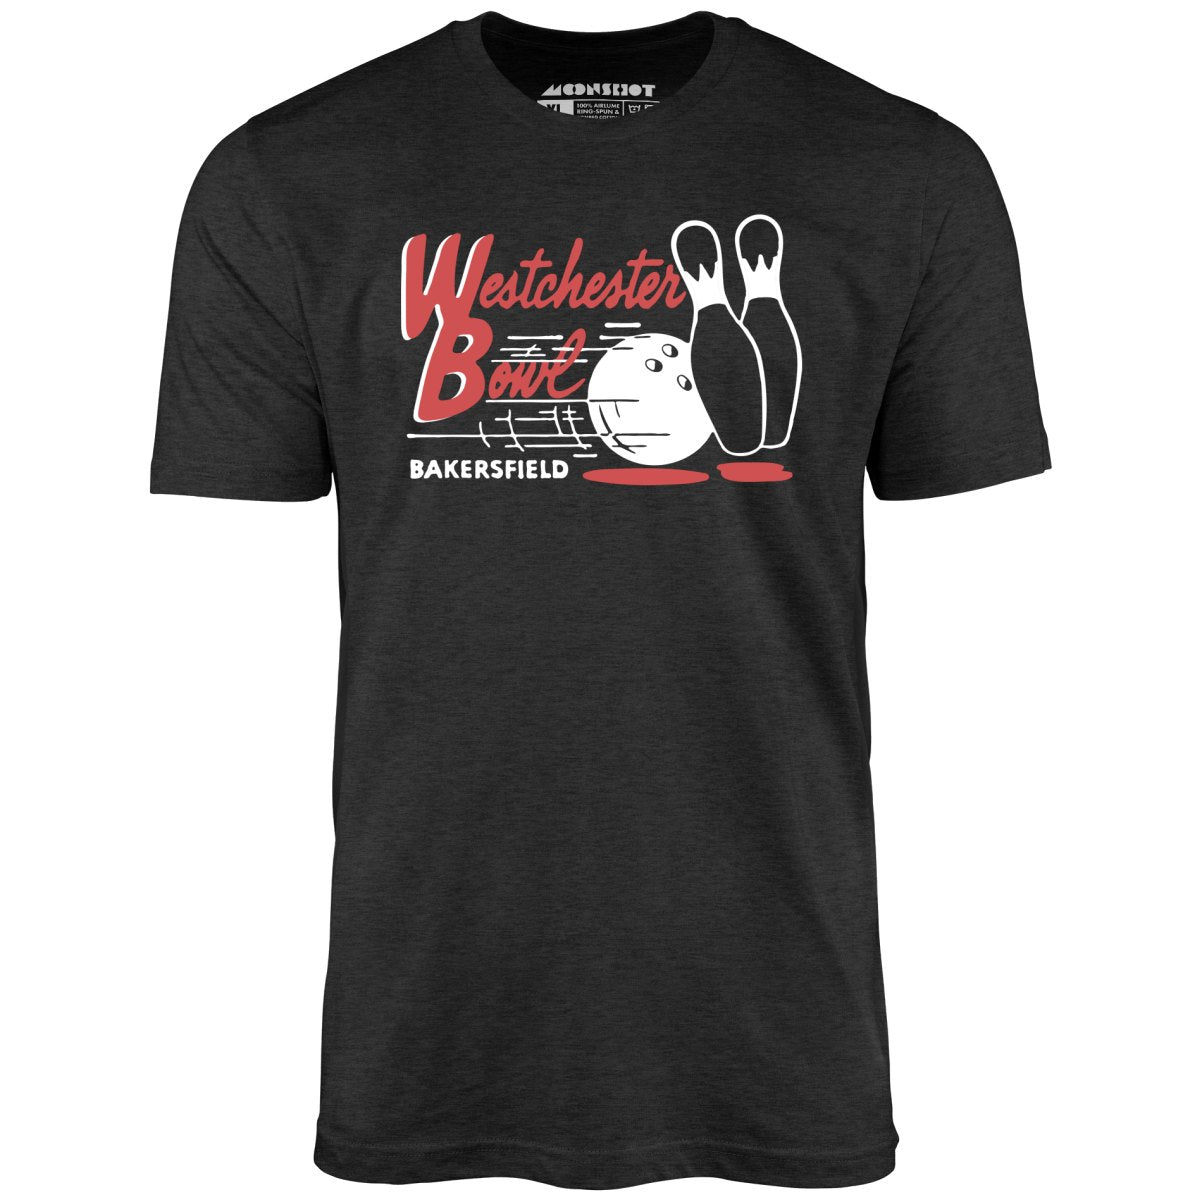 Westchester Bowl - Bakersfield, CA - Vintage Bowling Alley - Unisex T-Shirt